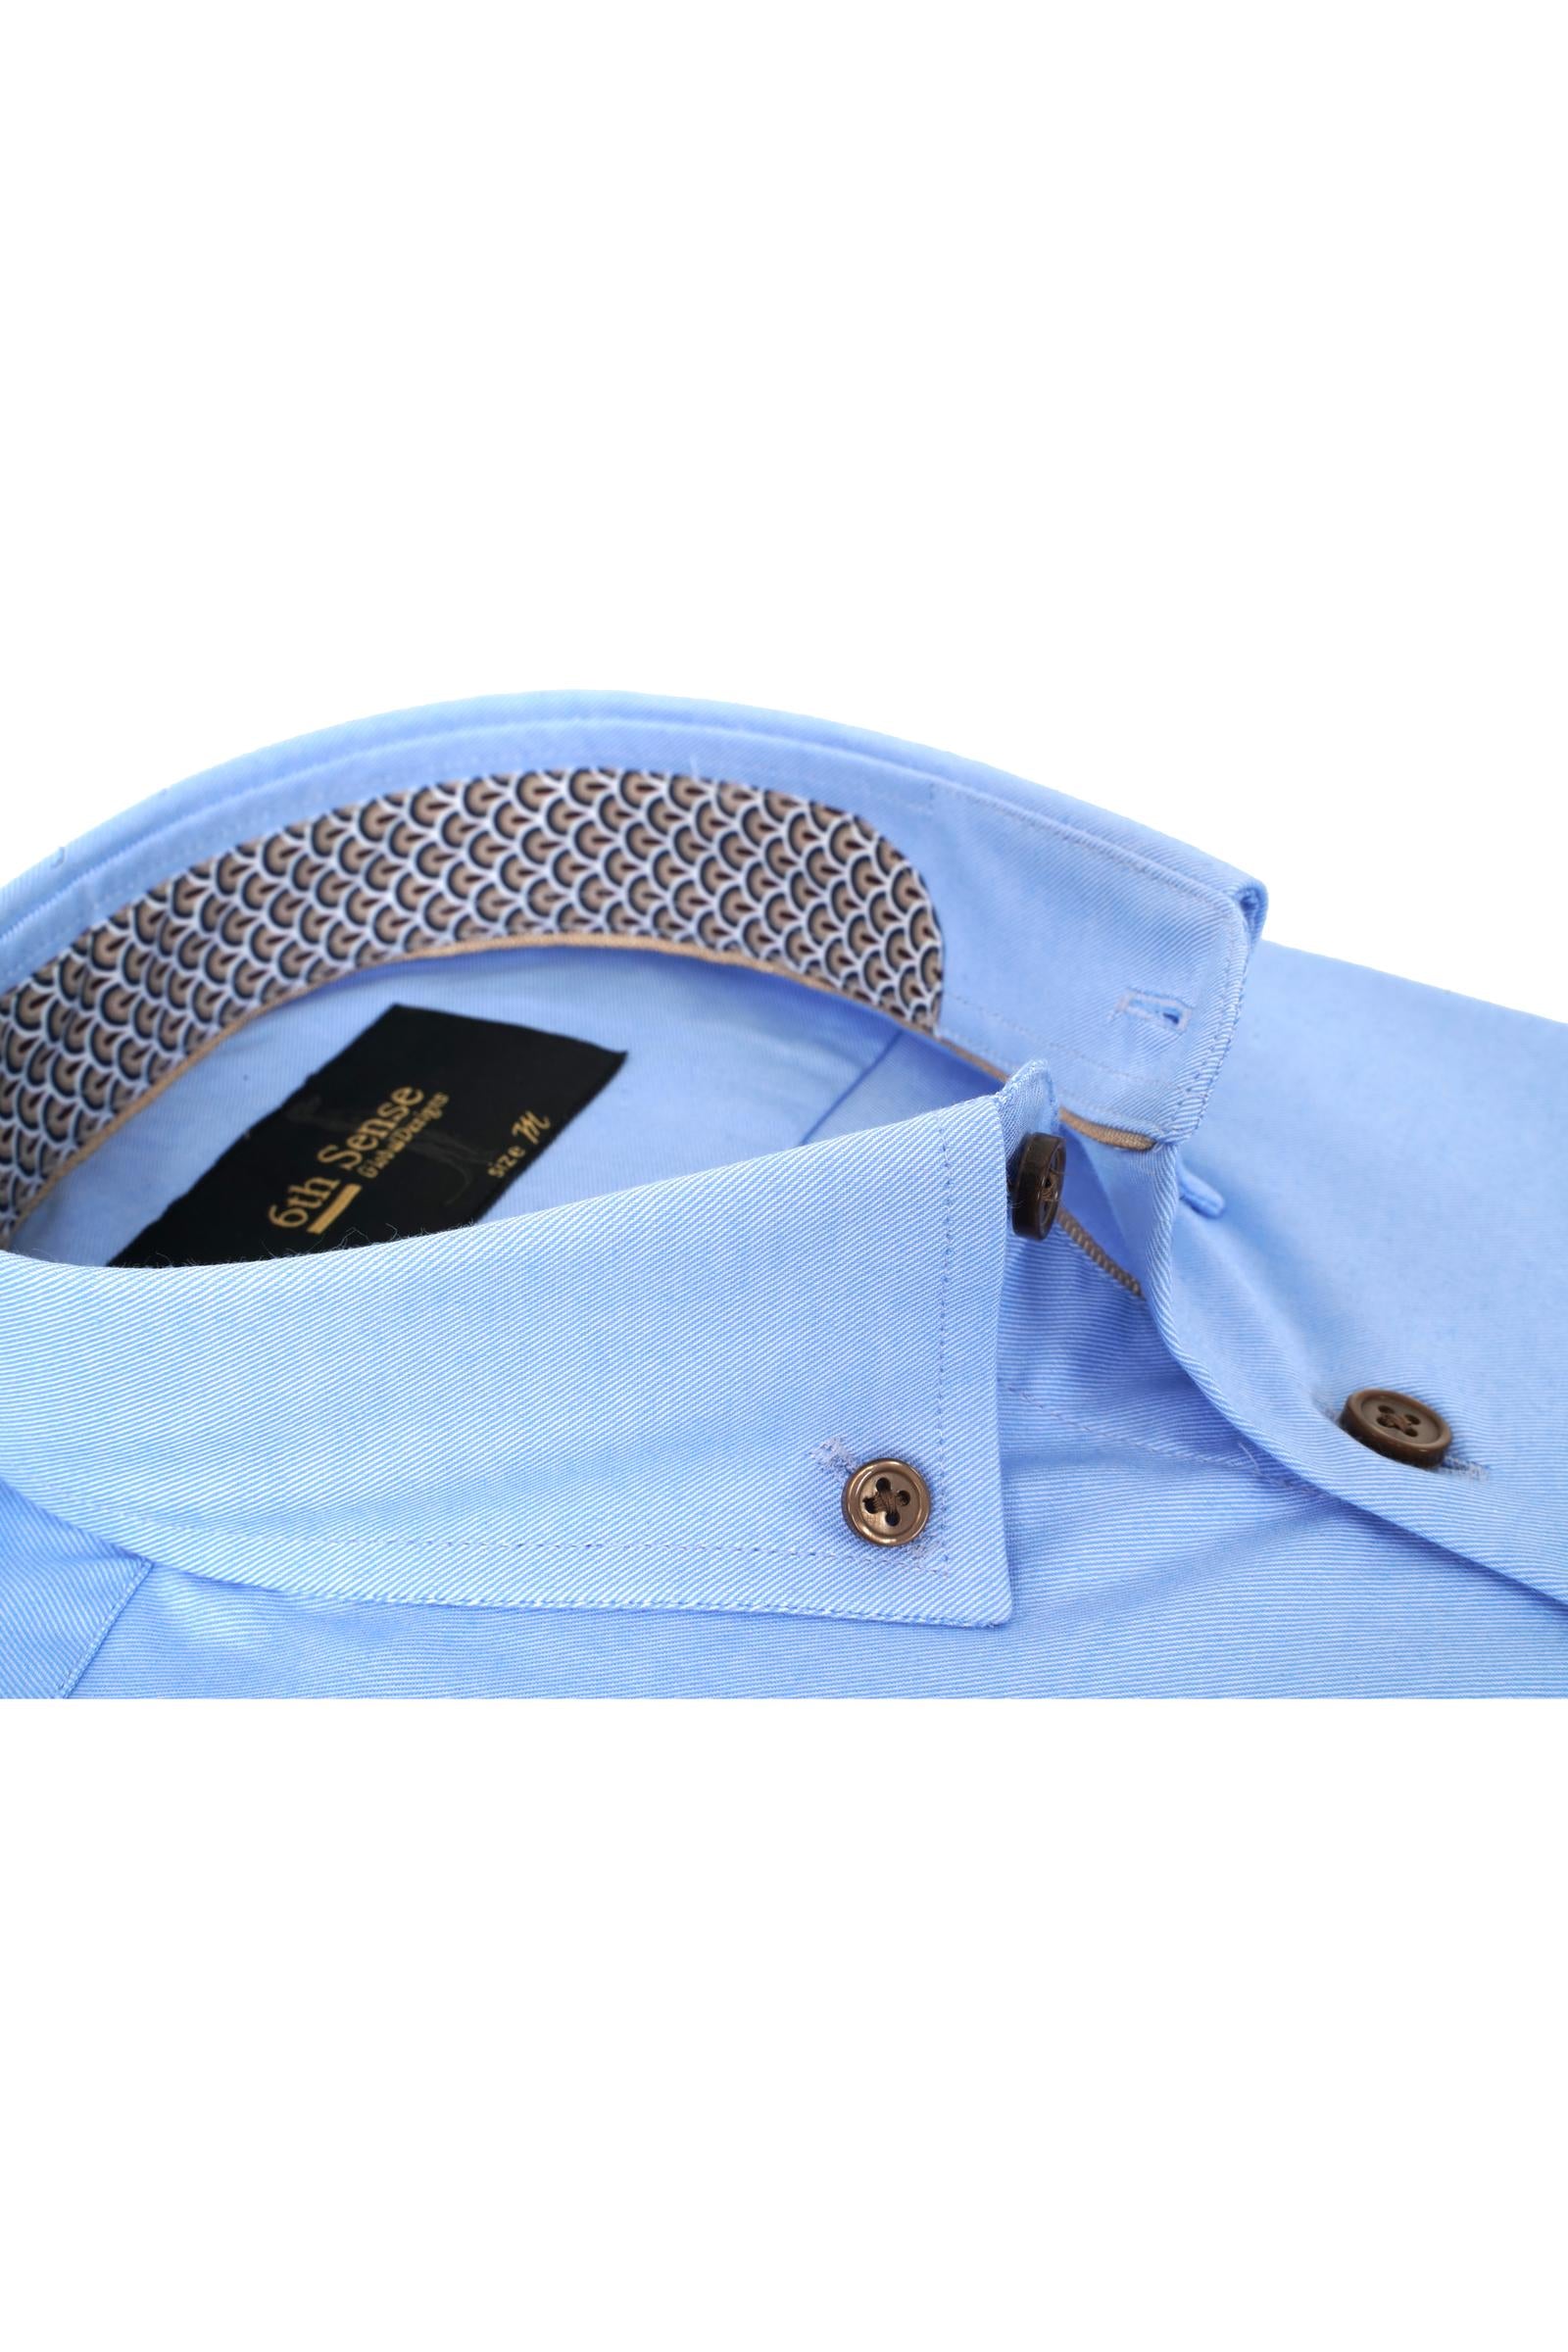 Button Down Blue Shirt-Collar view